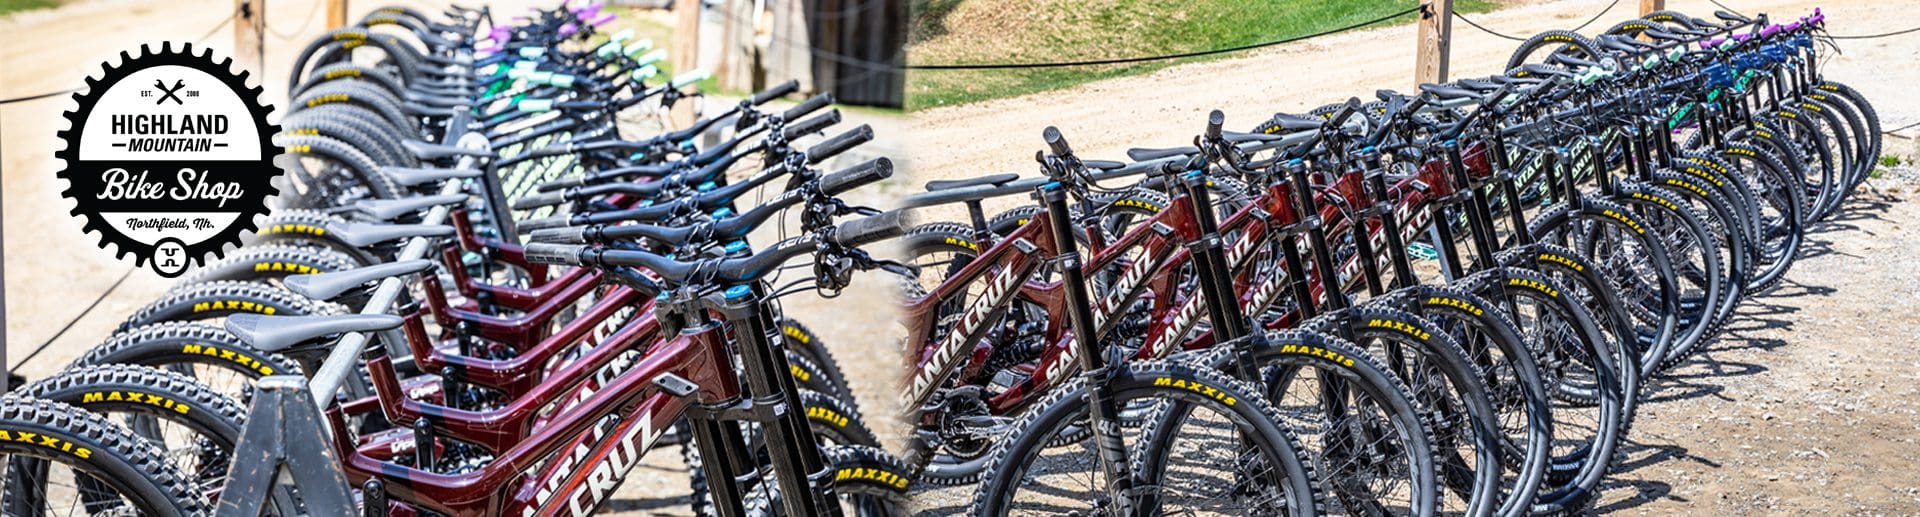 Bike and Equipment Rentals Highland Mountain Bike Park